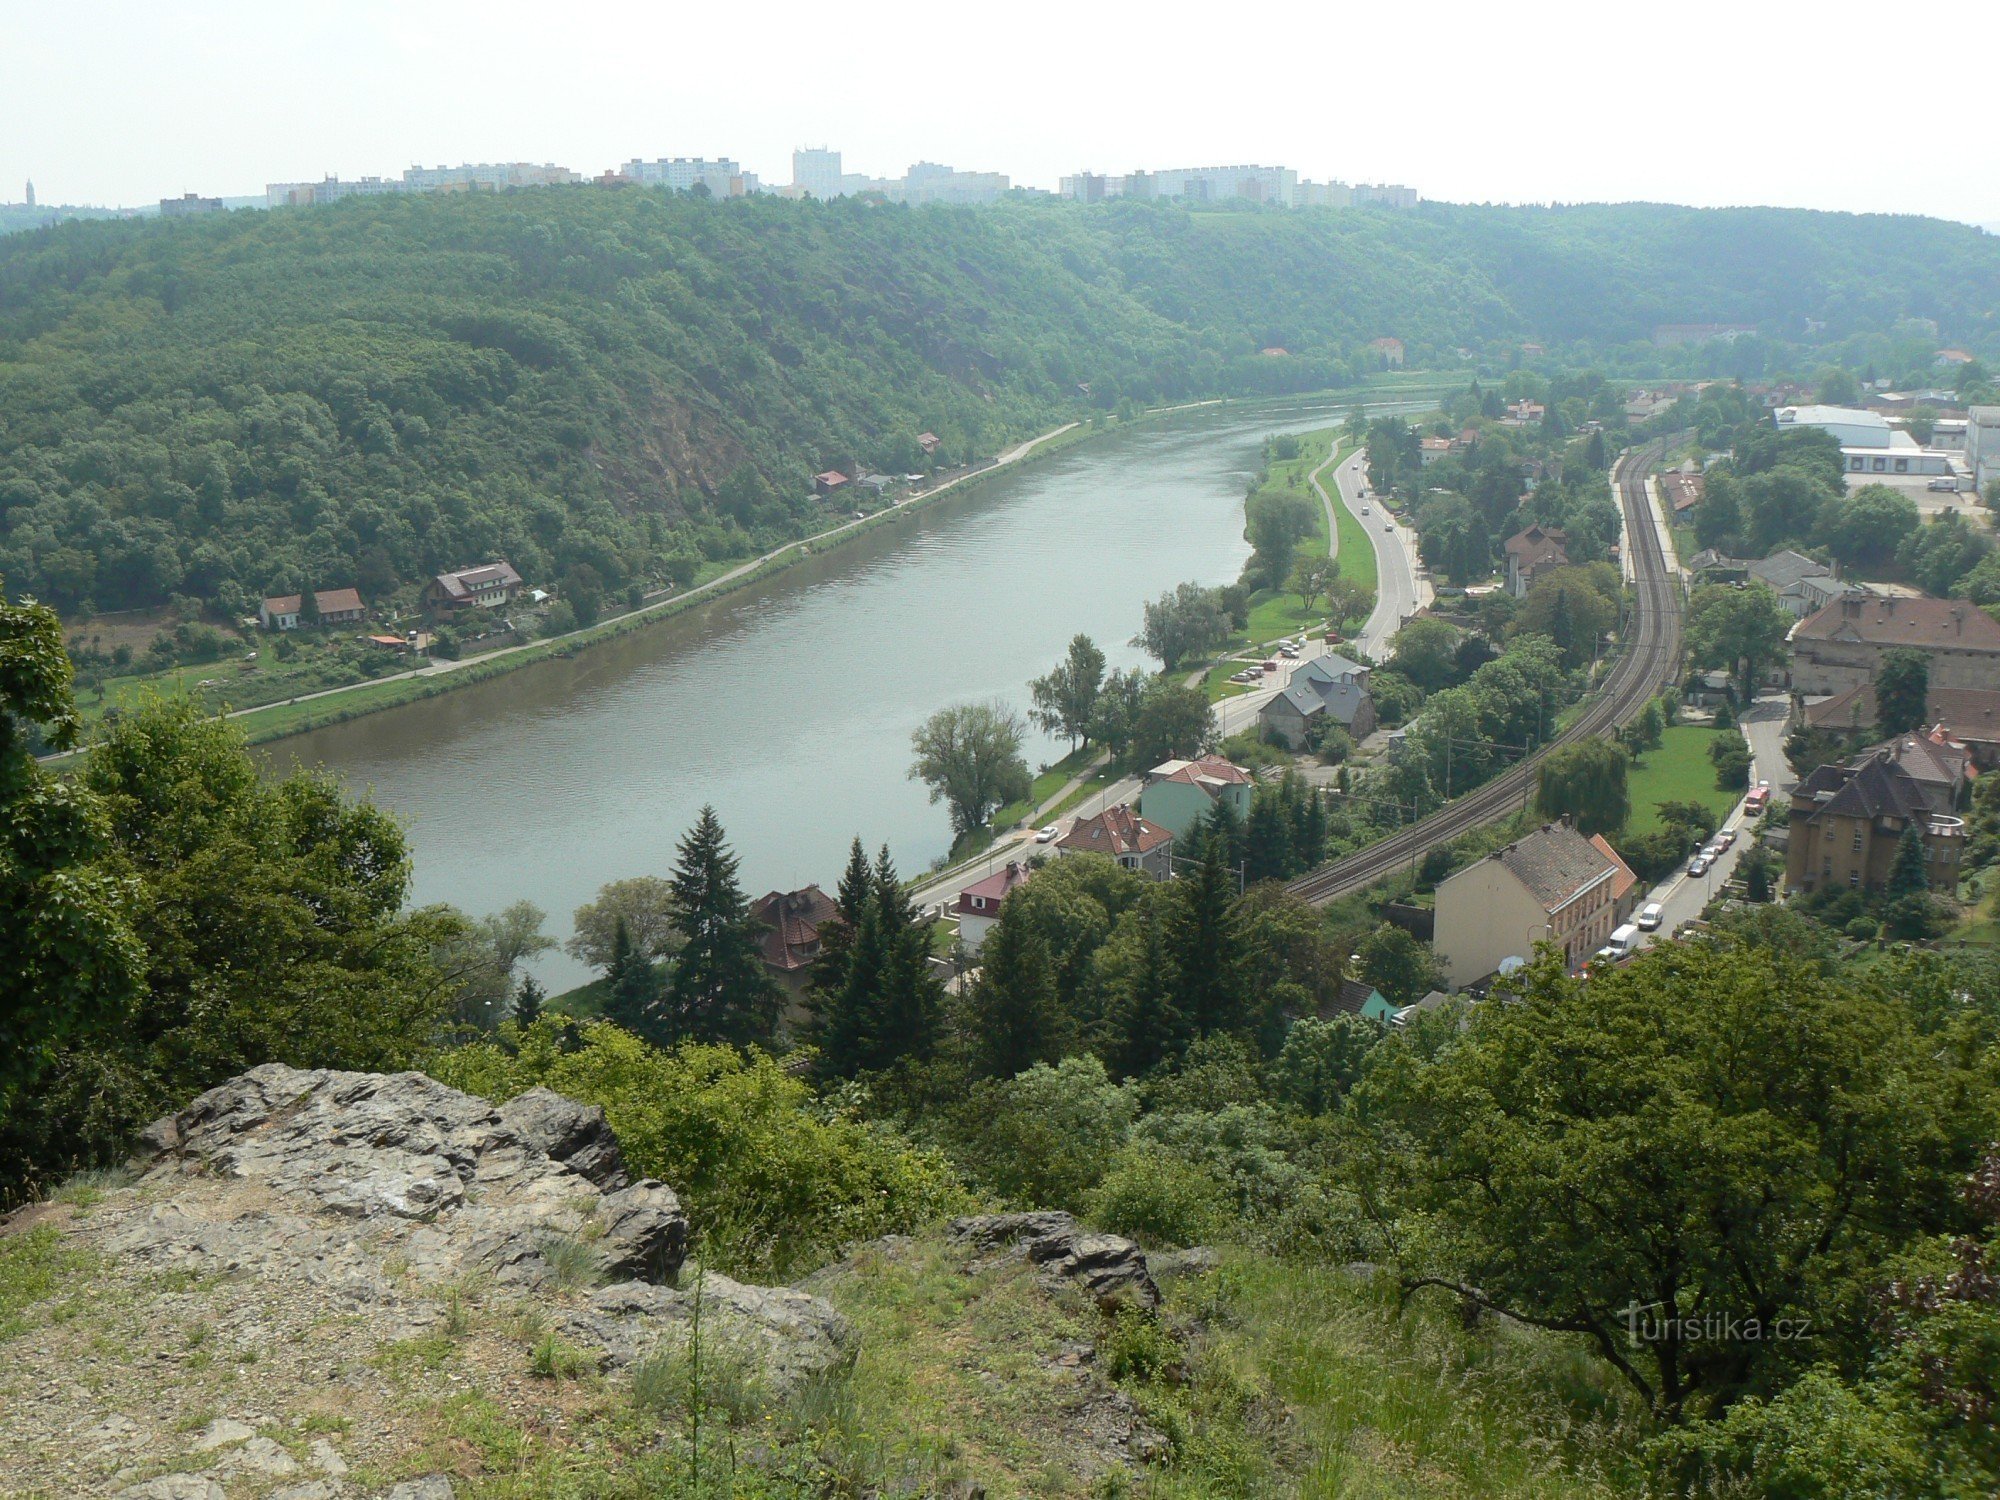 Vltava Valley and Sedlec, Roztocká street